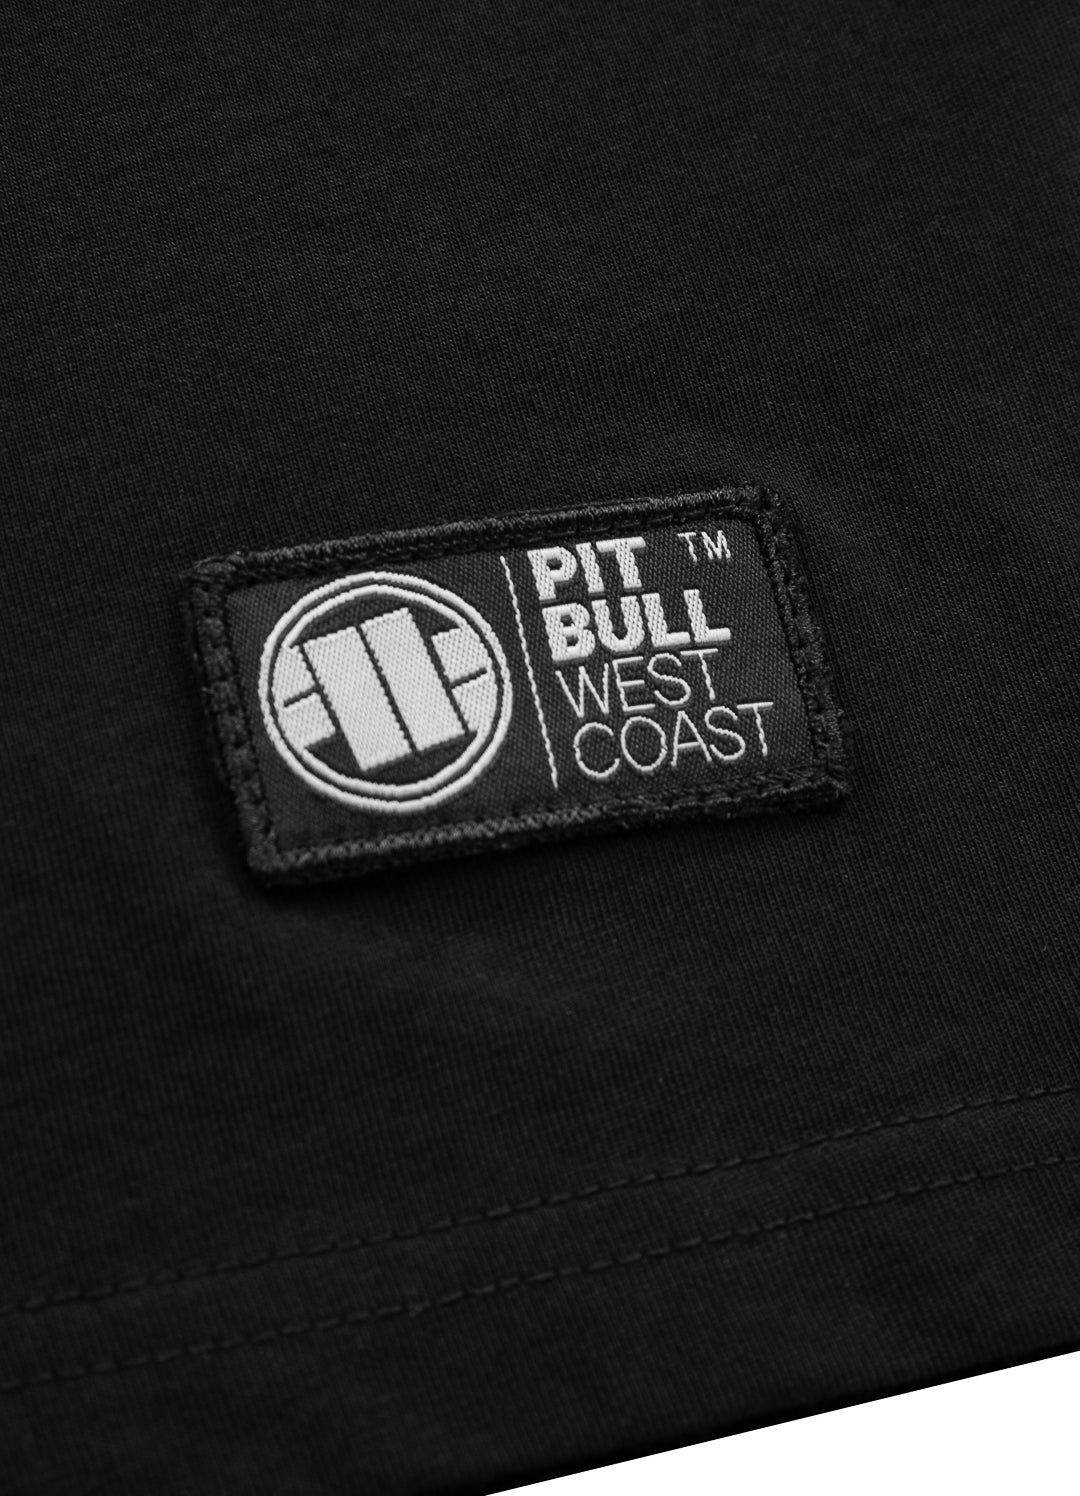 T-shirt BORN IN 1989 Black - Pitbull West Coast International Store 